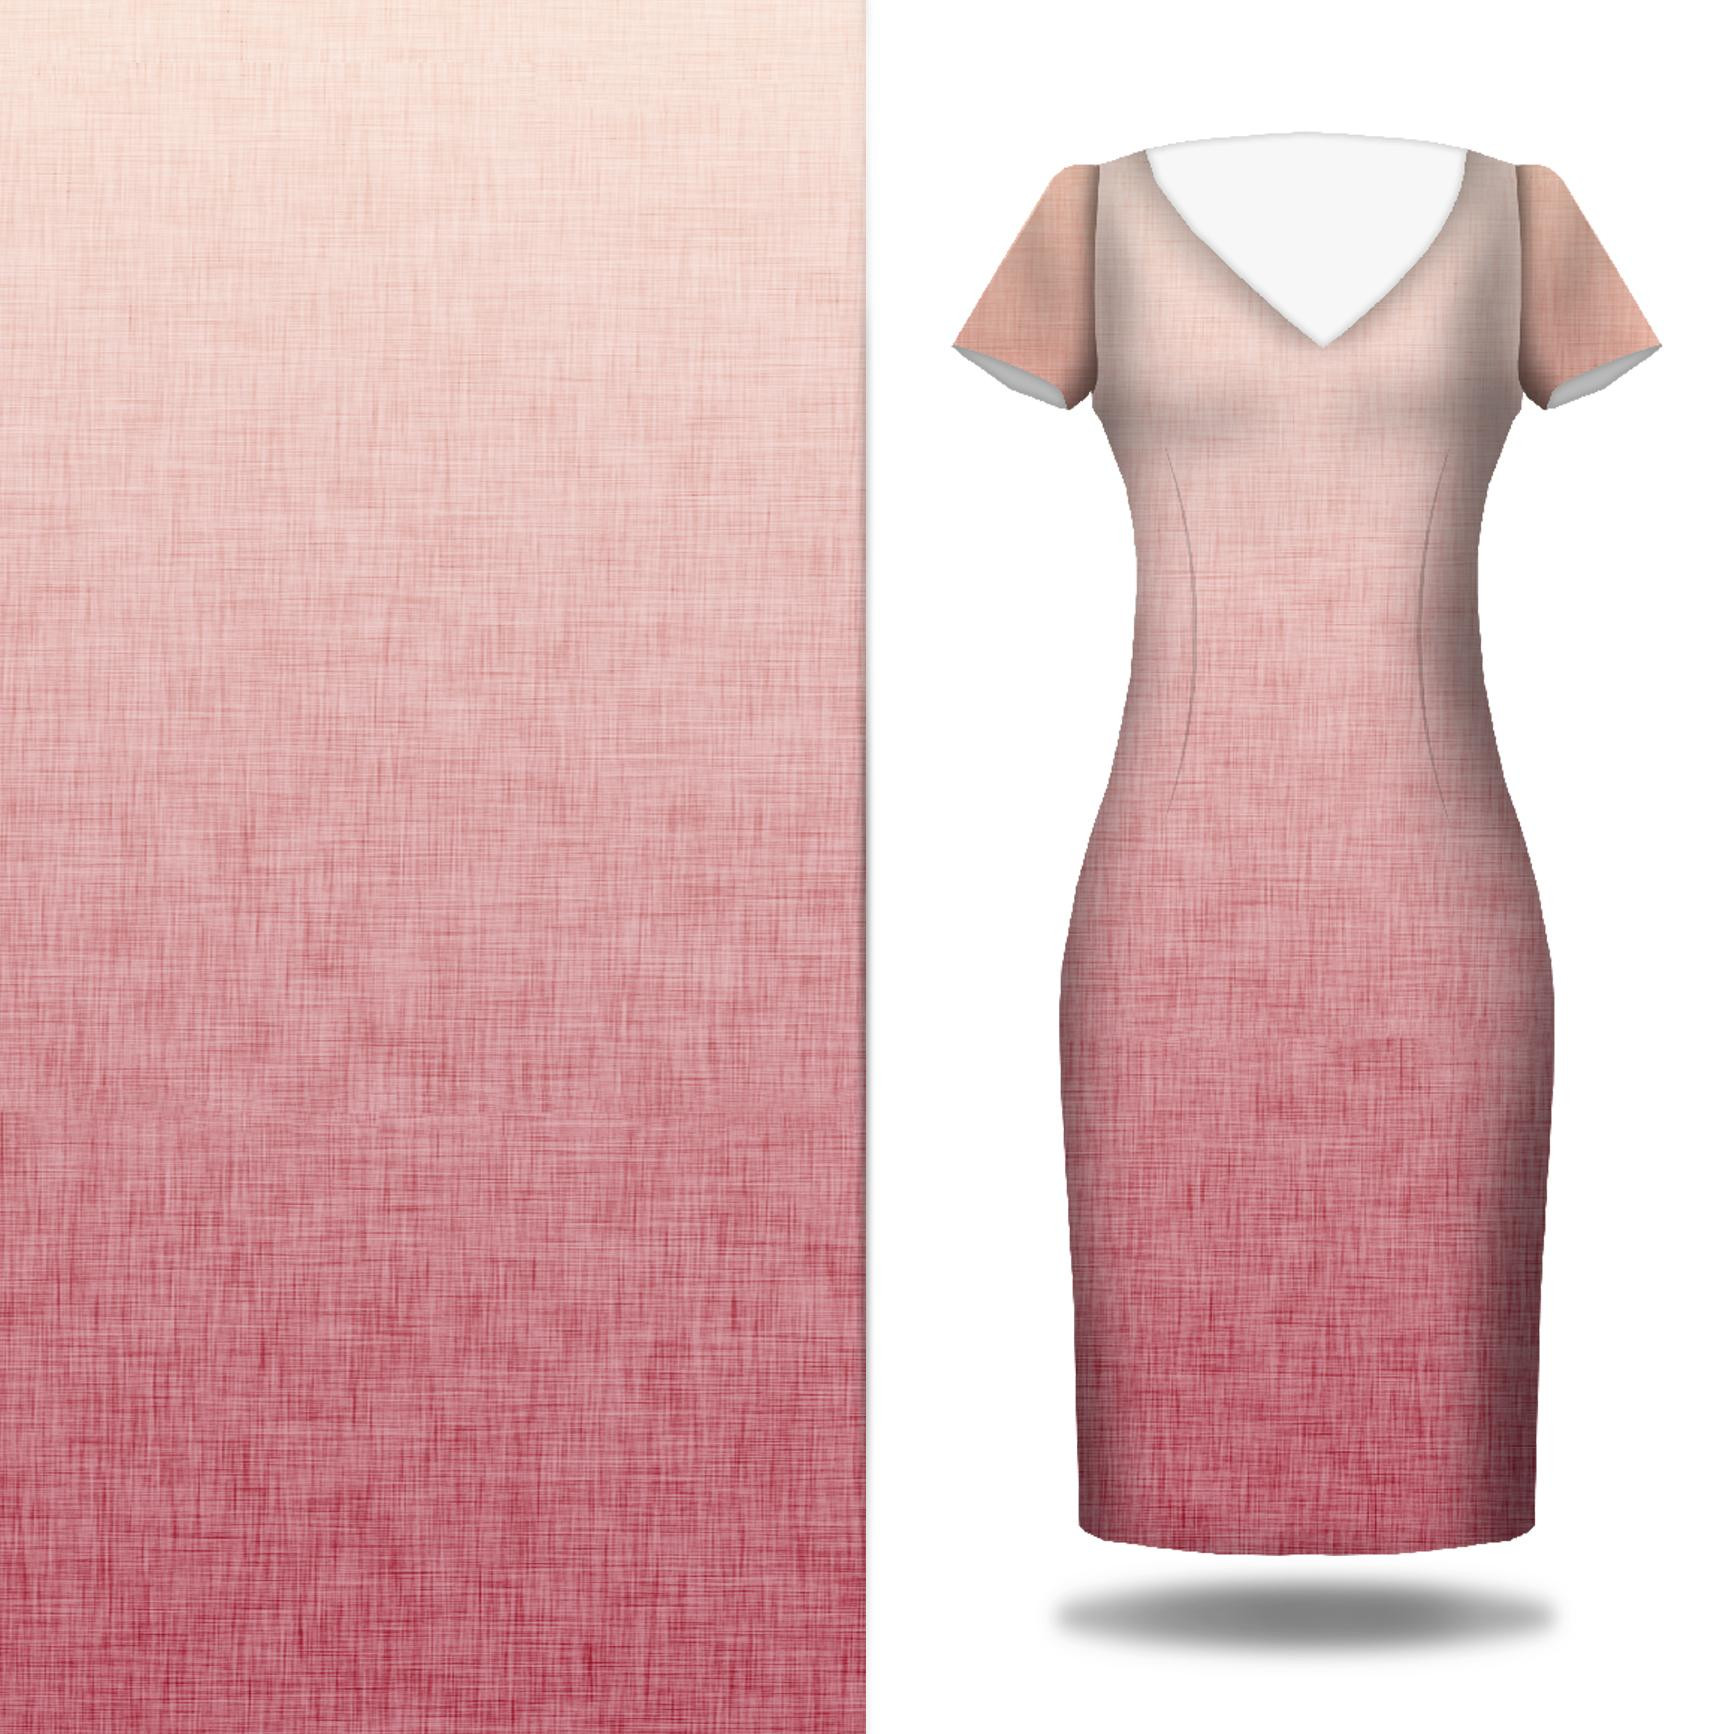 OMBRE / ACID WASH - fuksja (blady róż) - panel sukienkowy TE210